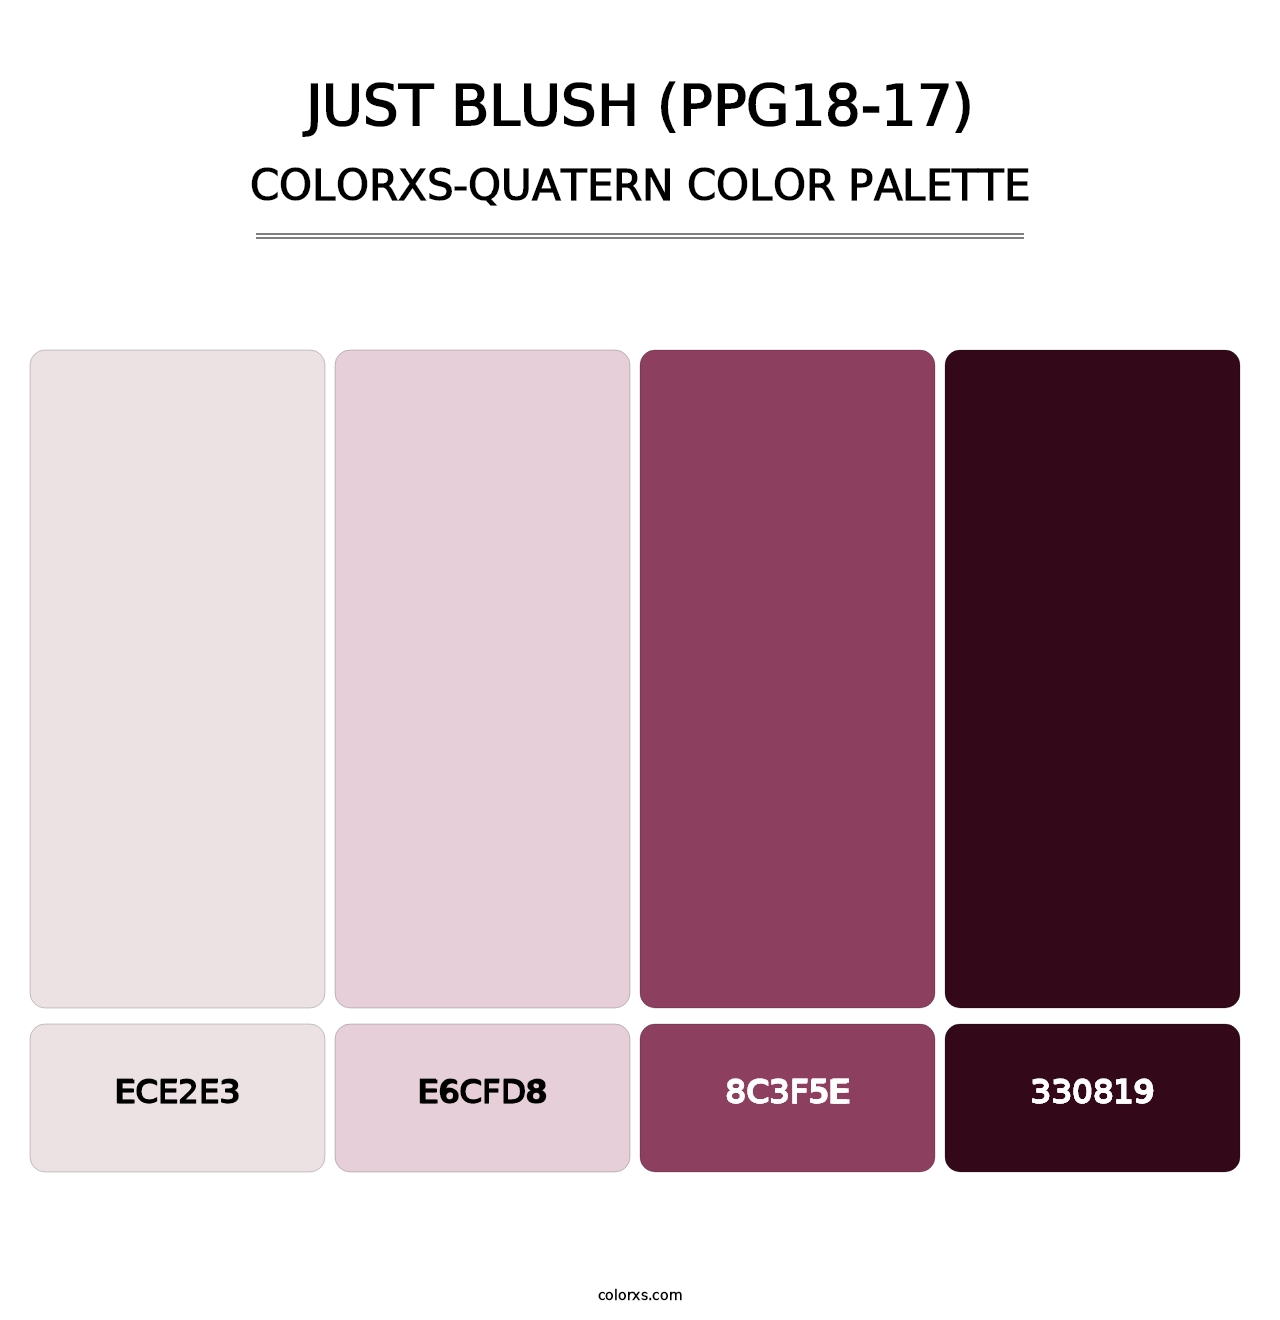 Just Blush (PPG18-17) - Colorxs Quatern Palette